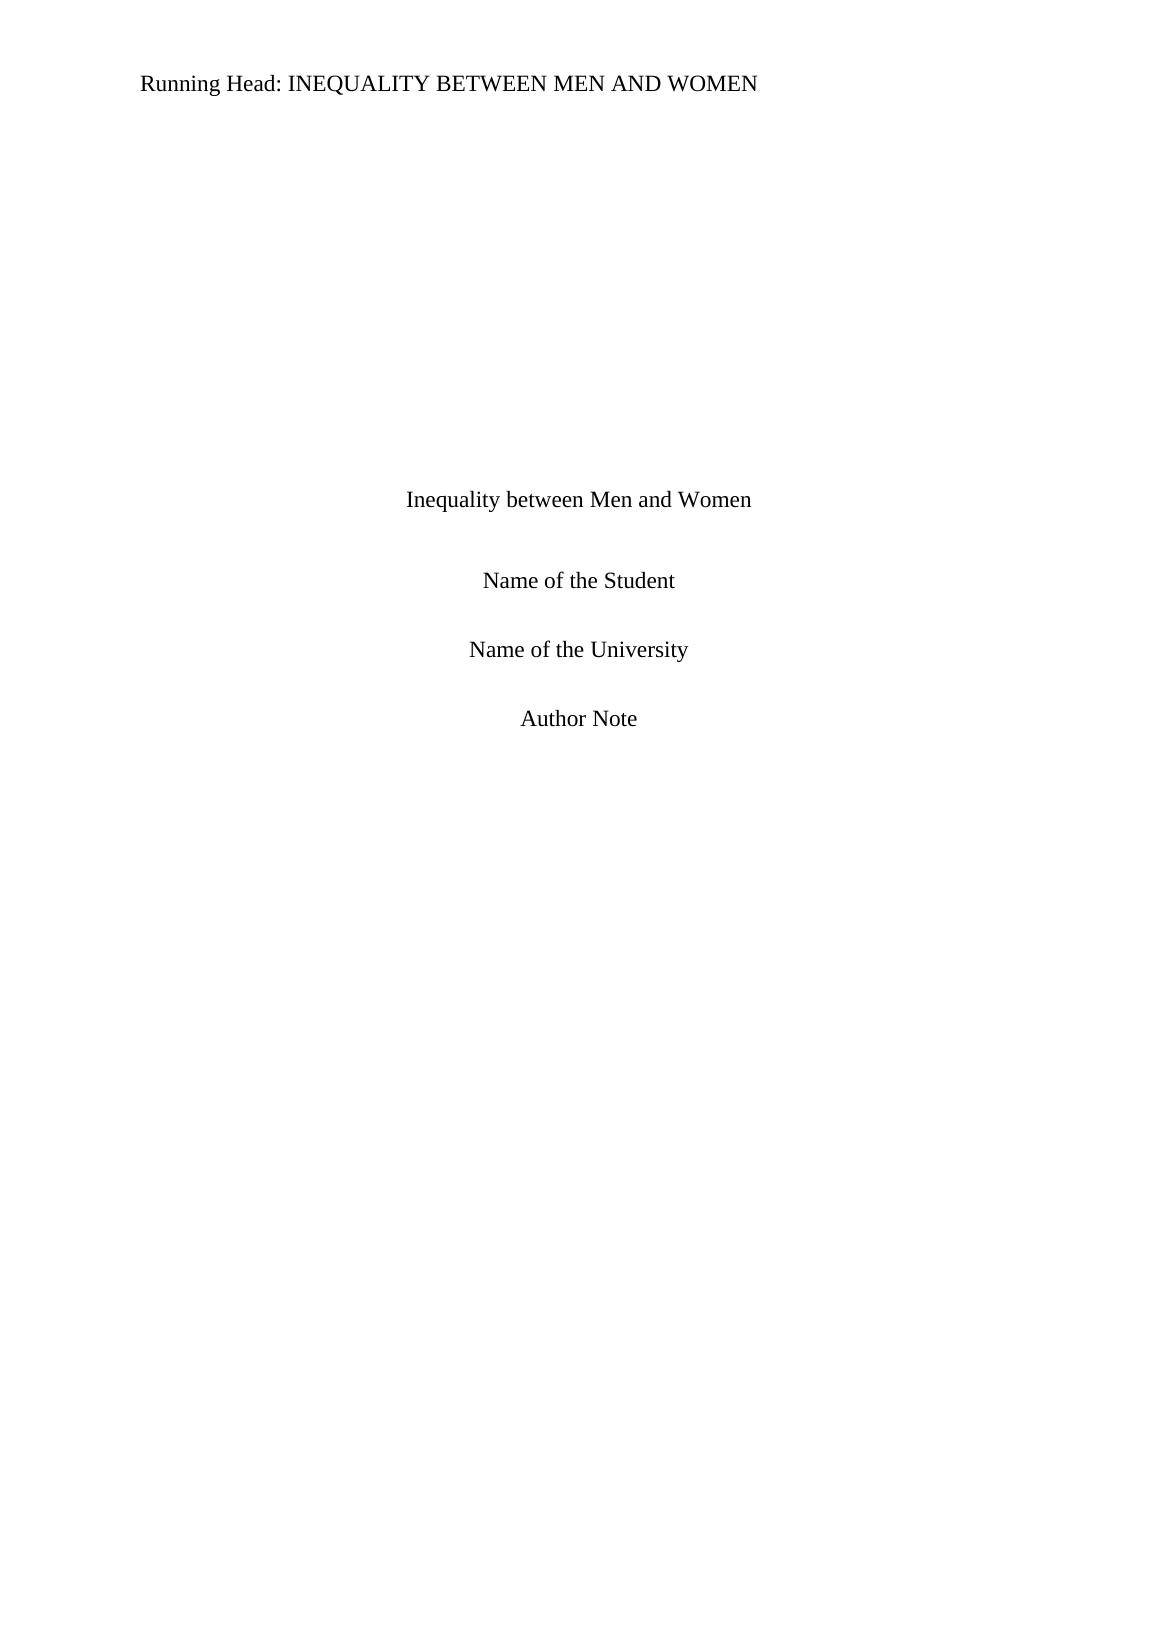 Inequality Between Men and Women | Research Report_1